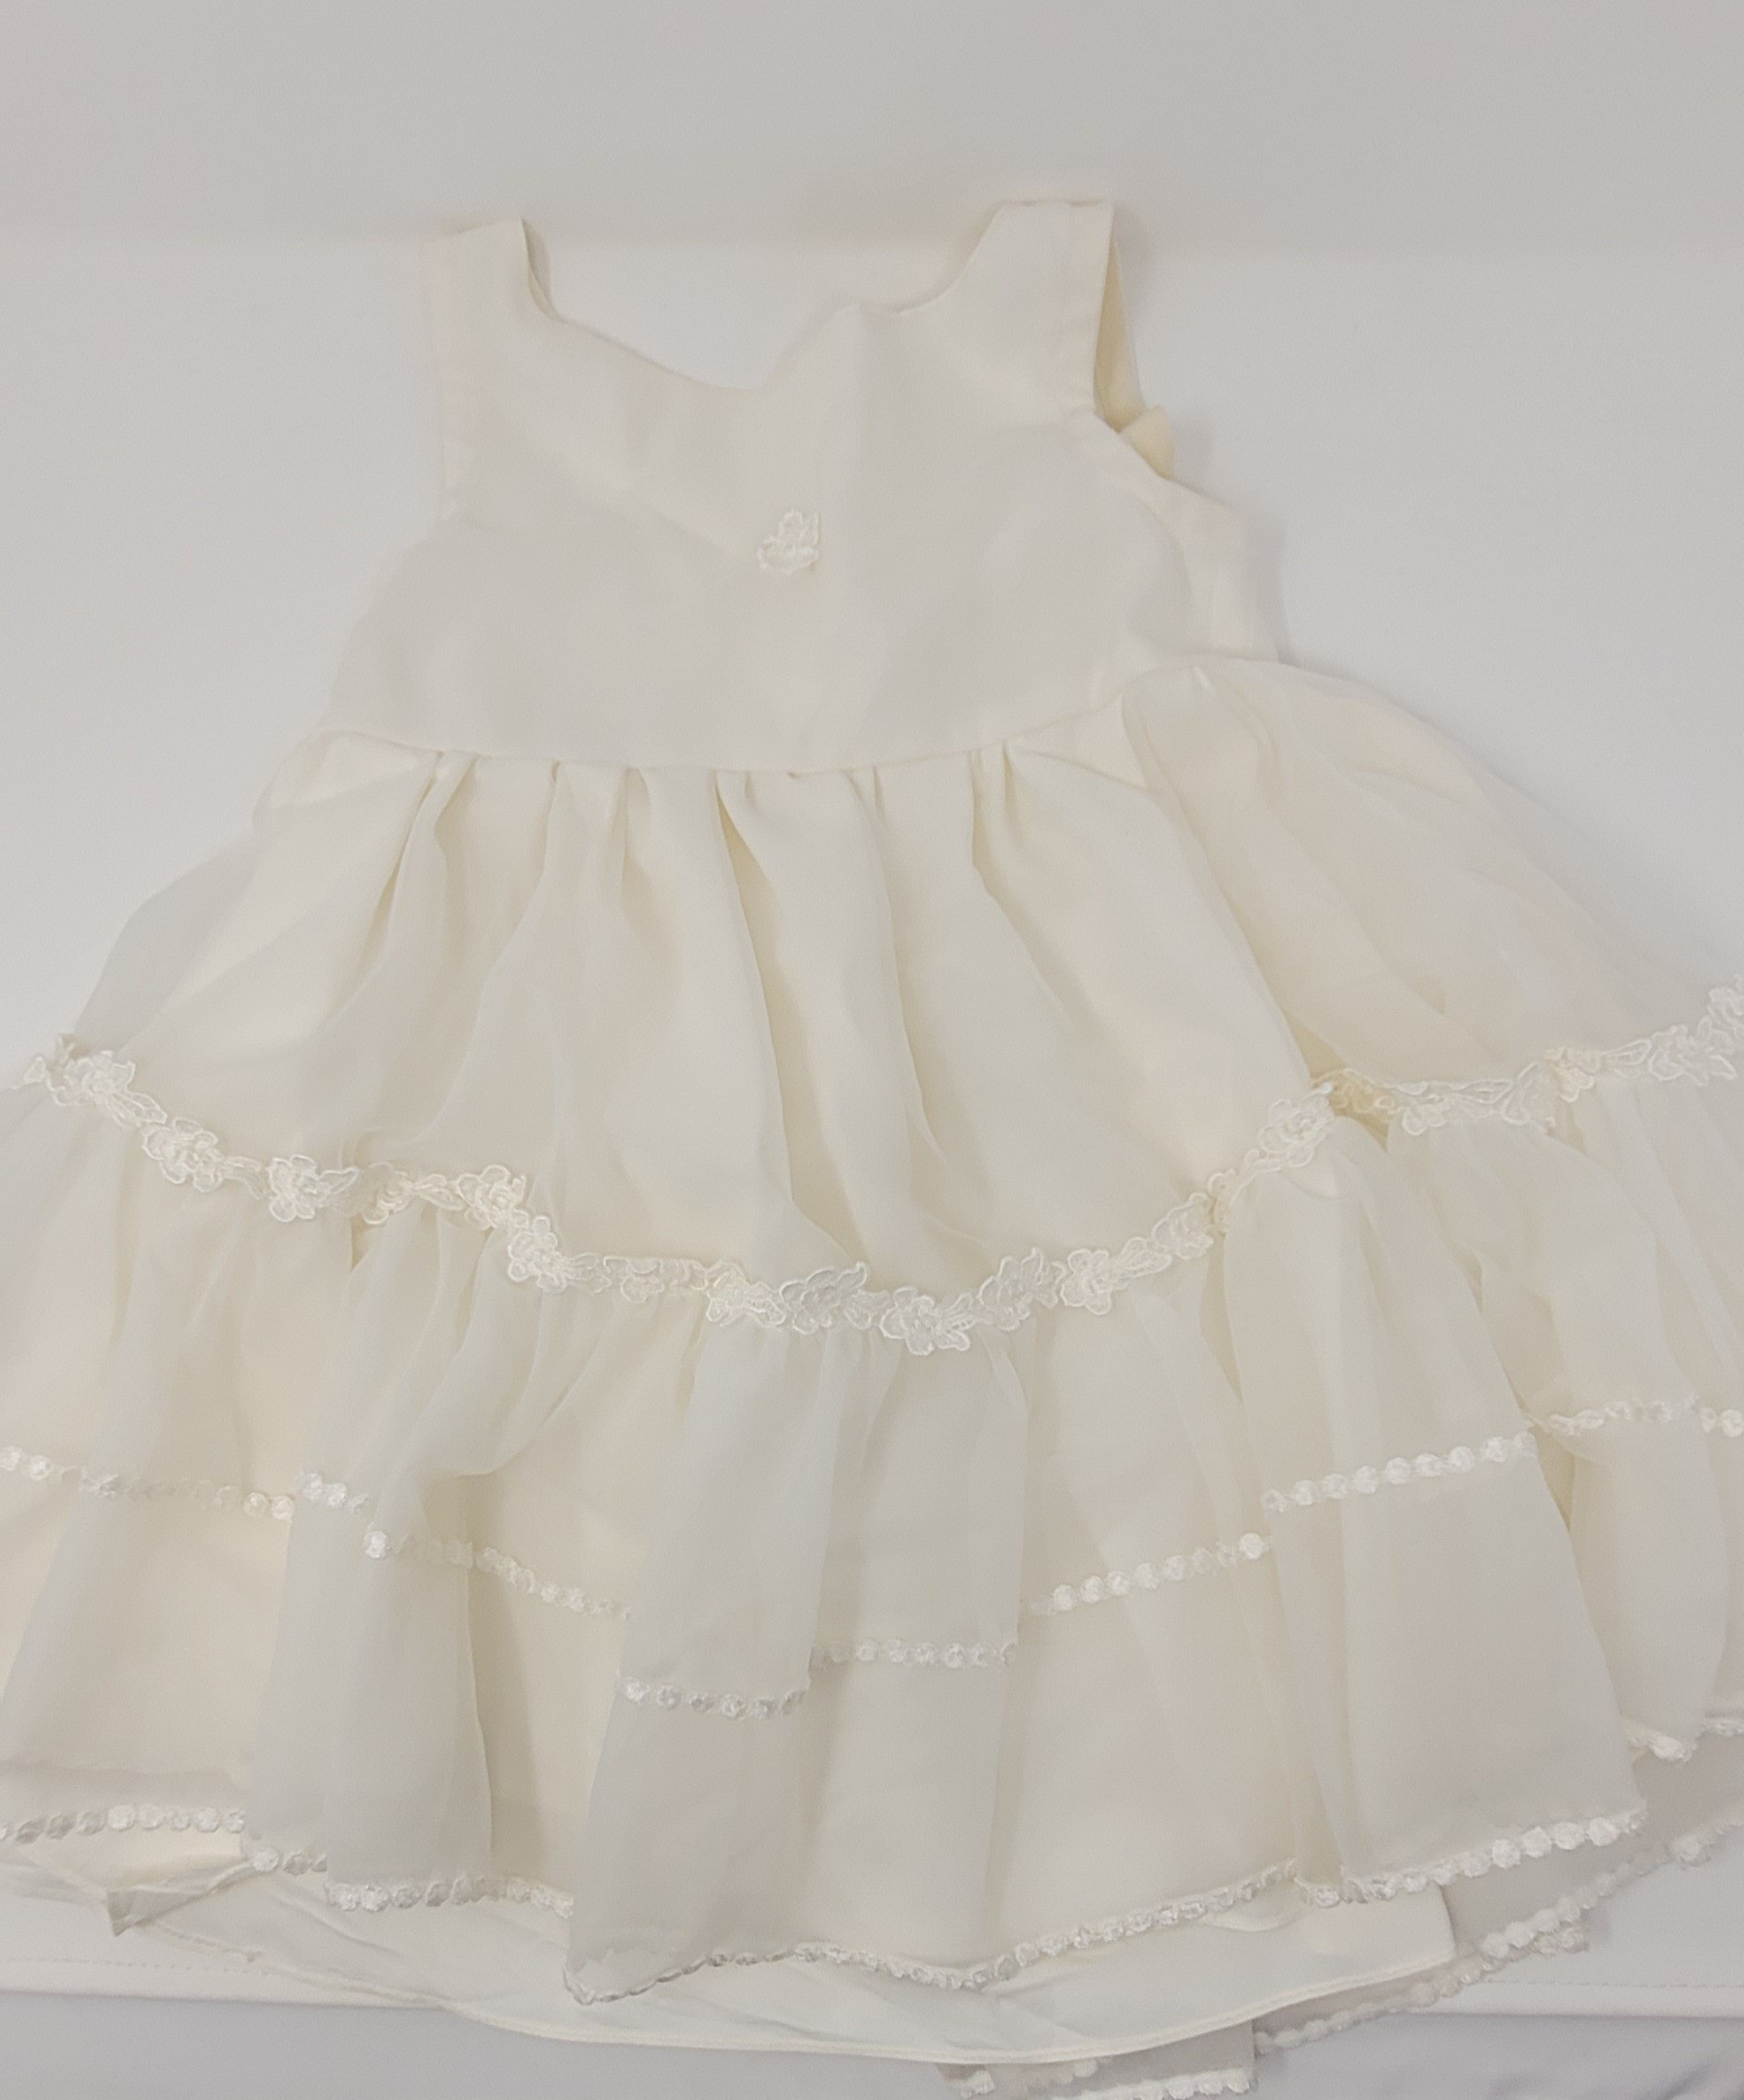 Hand Sewn Little Girl's Dress Made from Reclaimed Wedding Dress